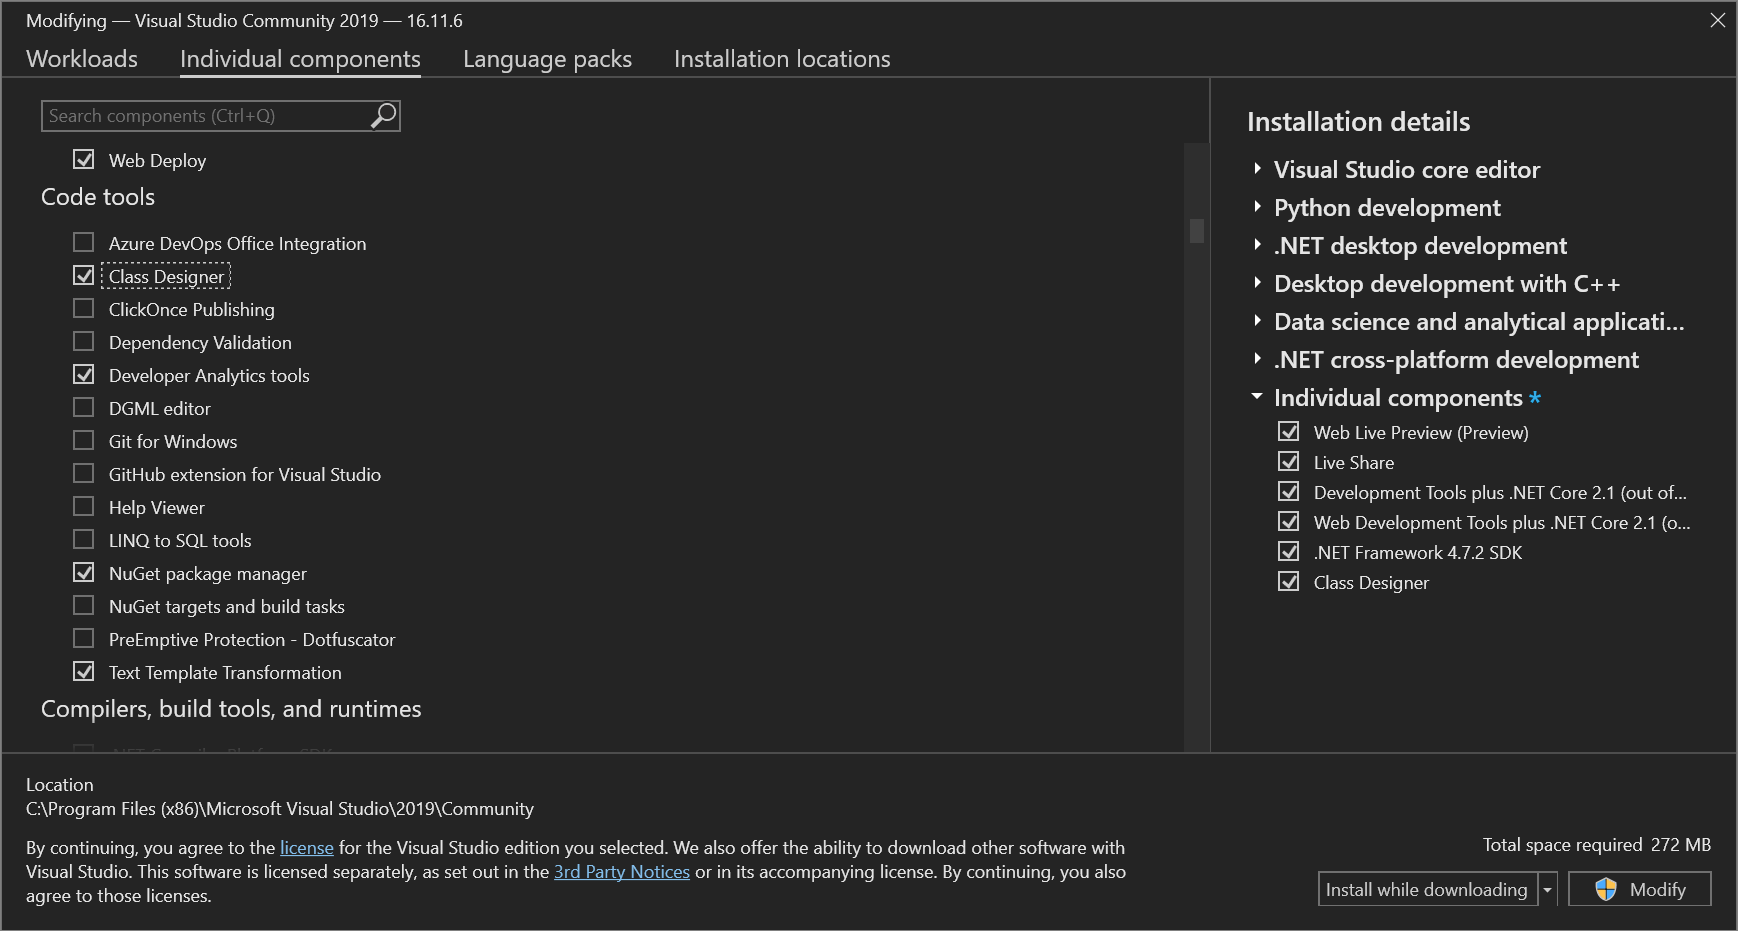 Screenshot of the Class Designer component in the Visual Studio Installer.